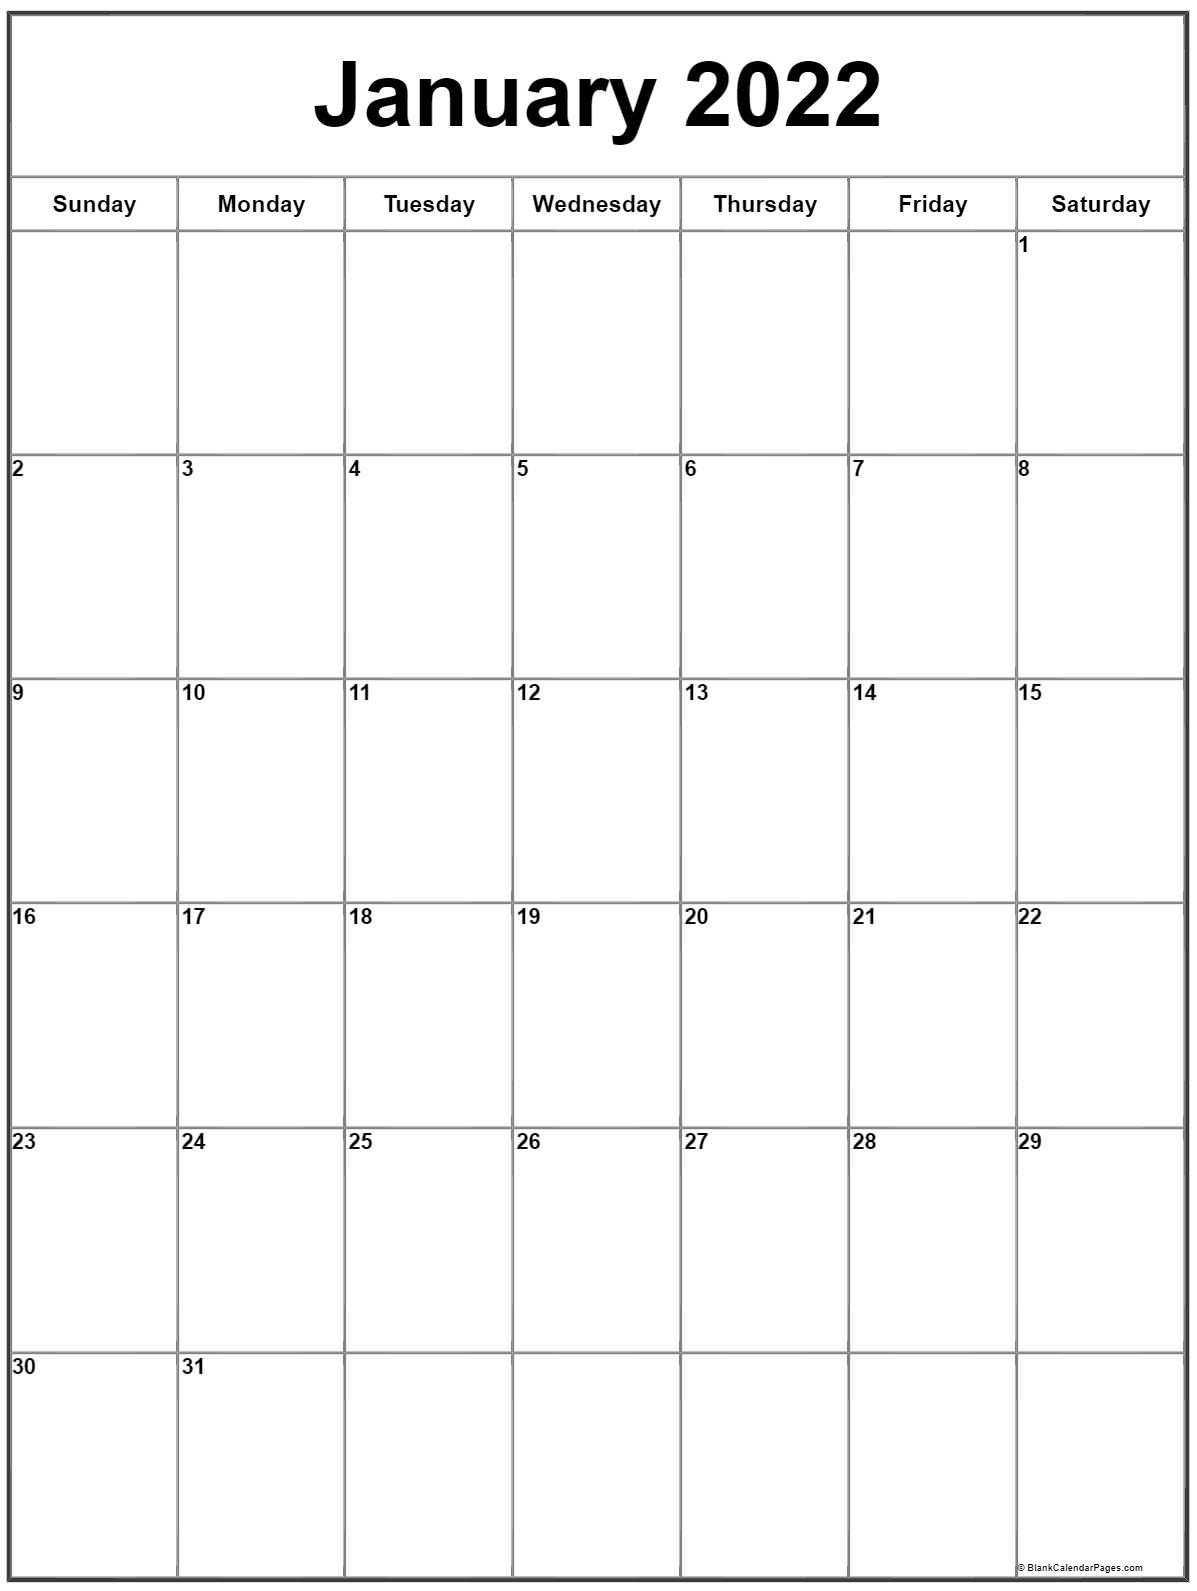 Get Daily Calendar 2022 January